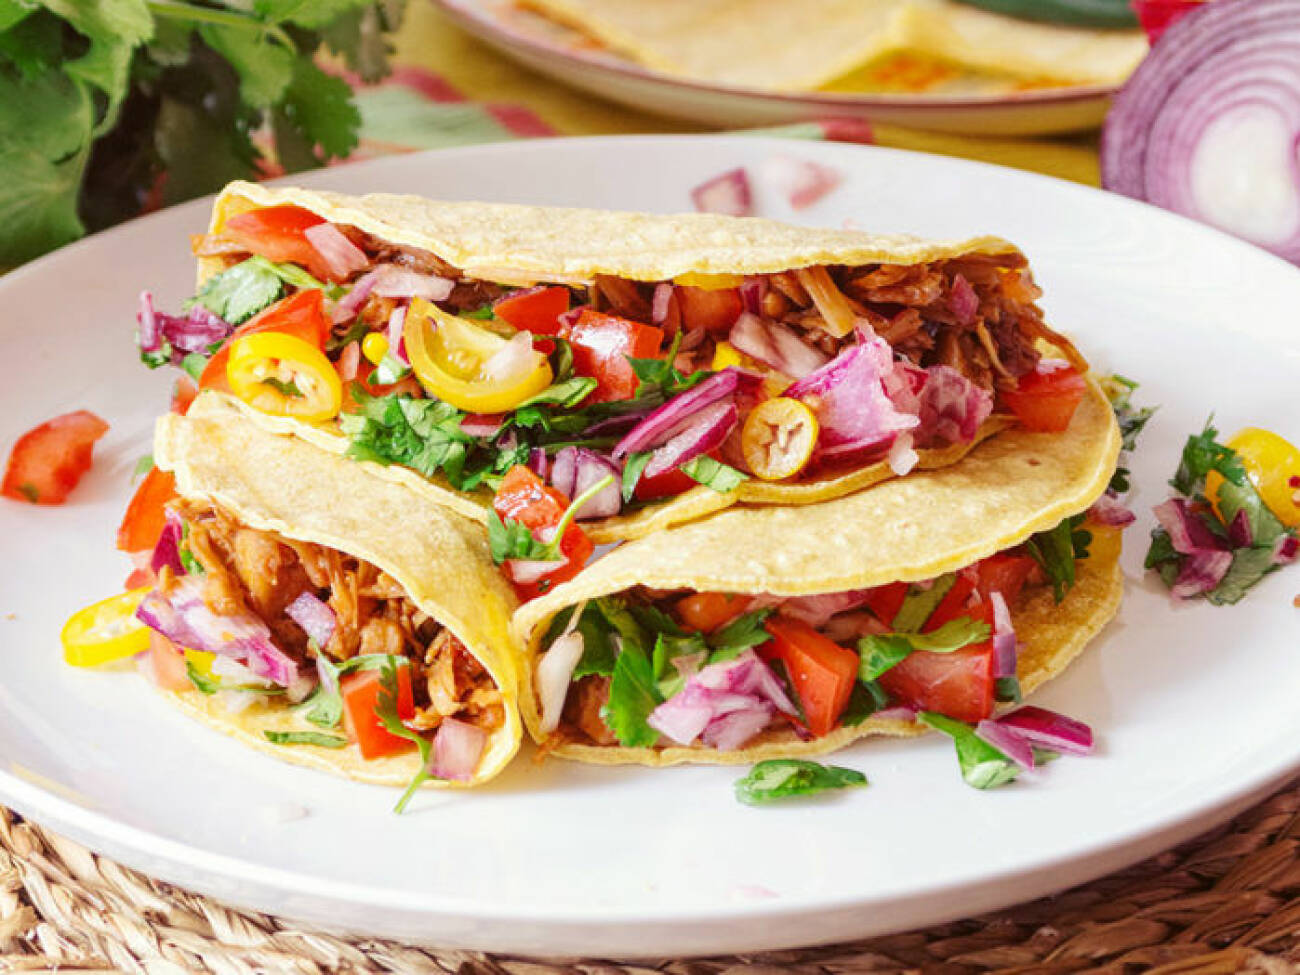 Pulled jackfruit med tacos. Foto: Shutterstock